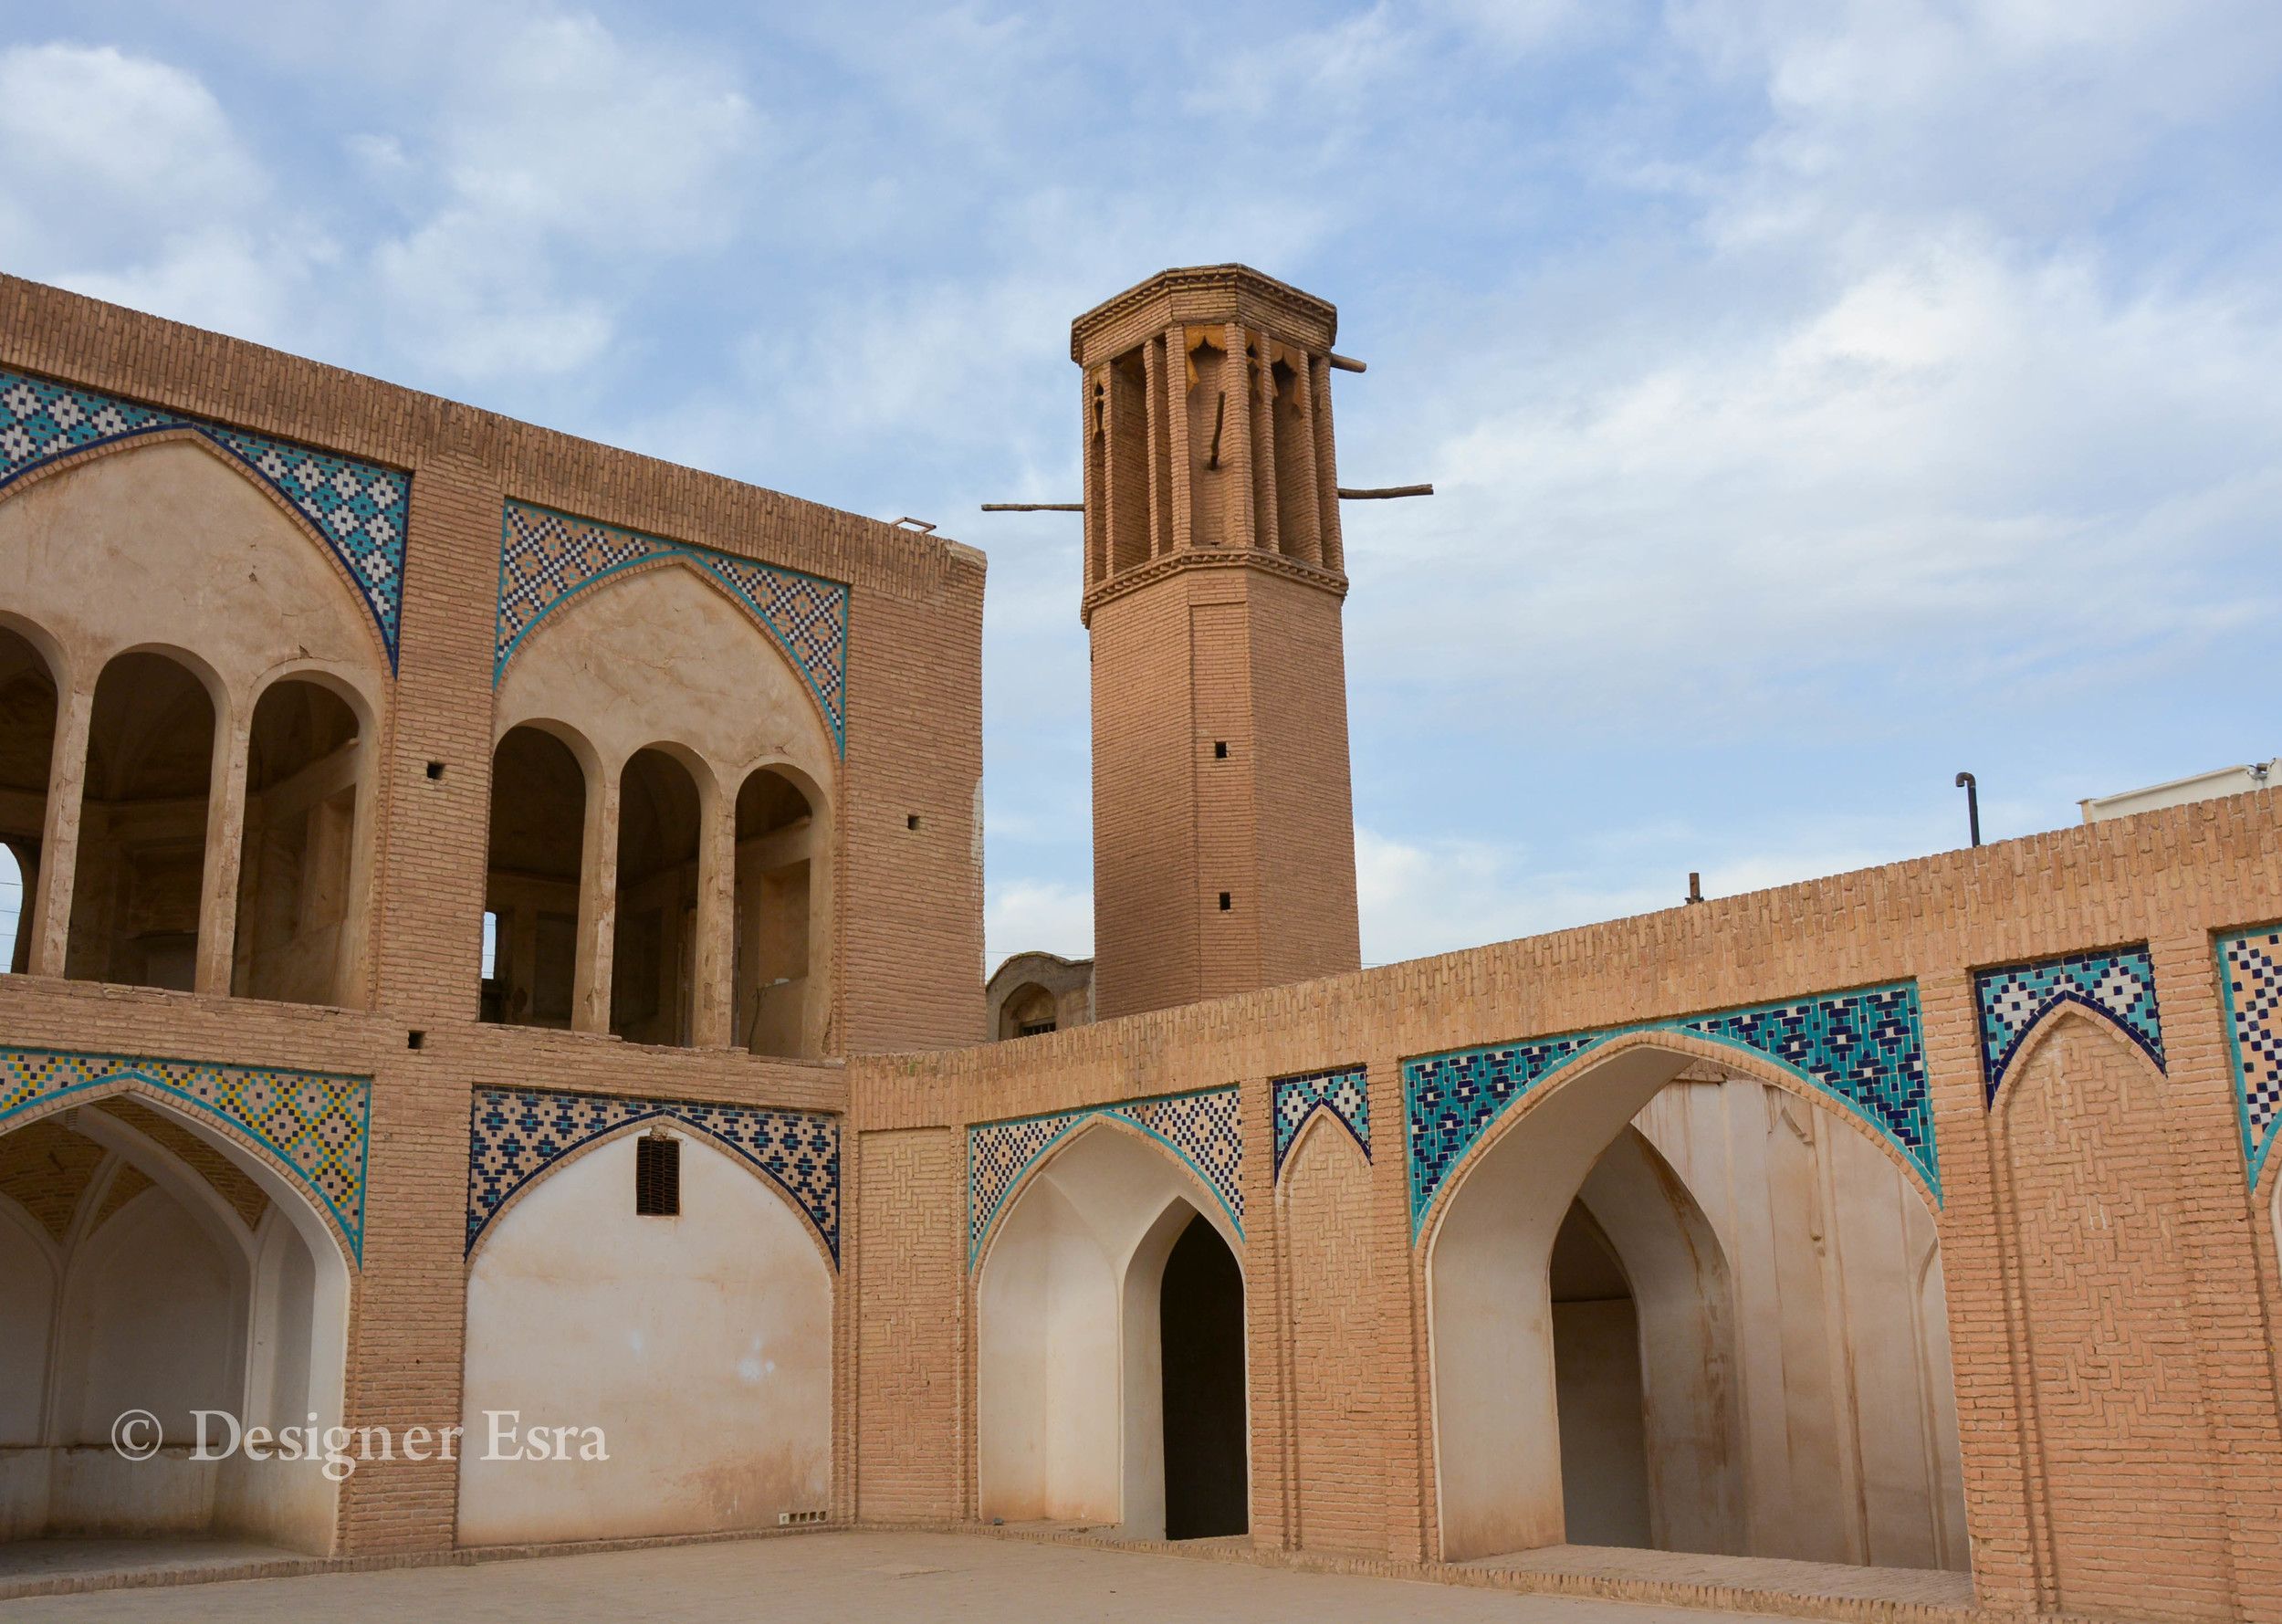 Windcatcher in Agha Bozorg Mosque in Kashan, Iran